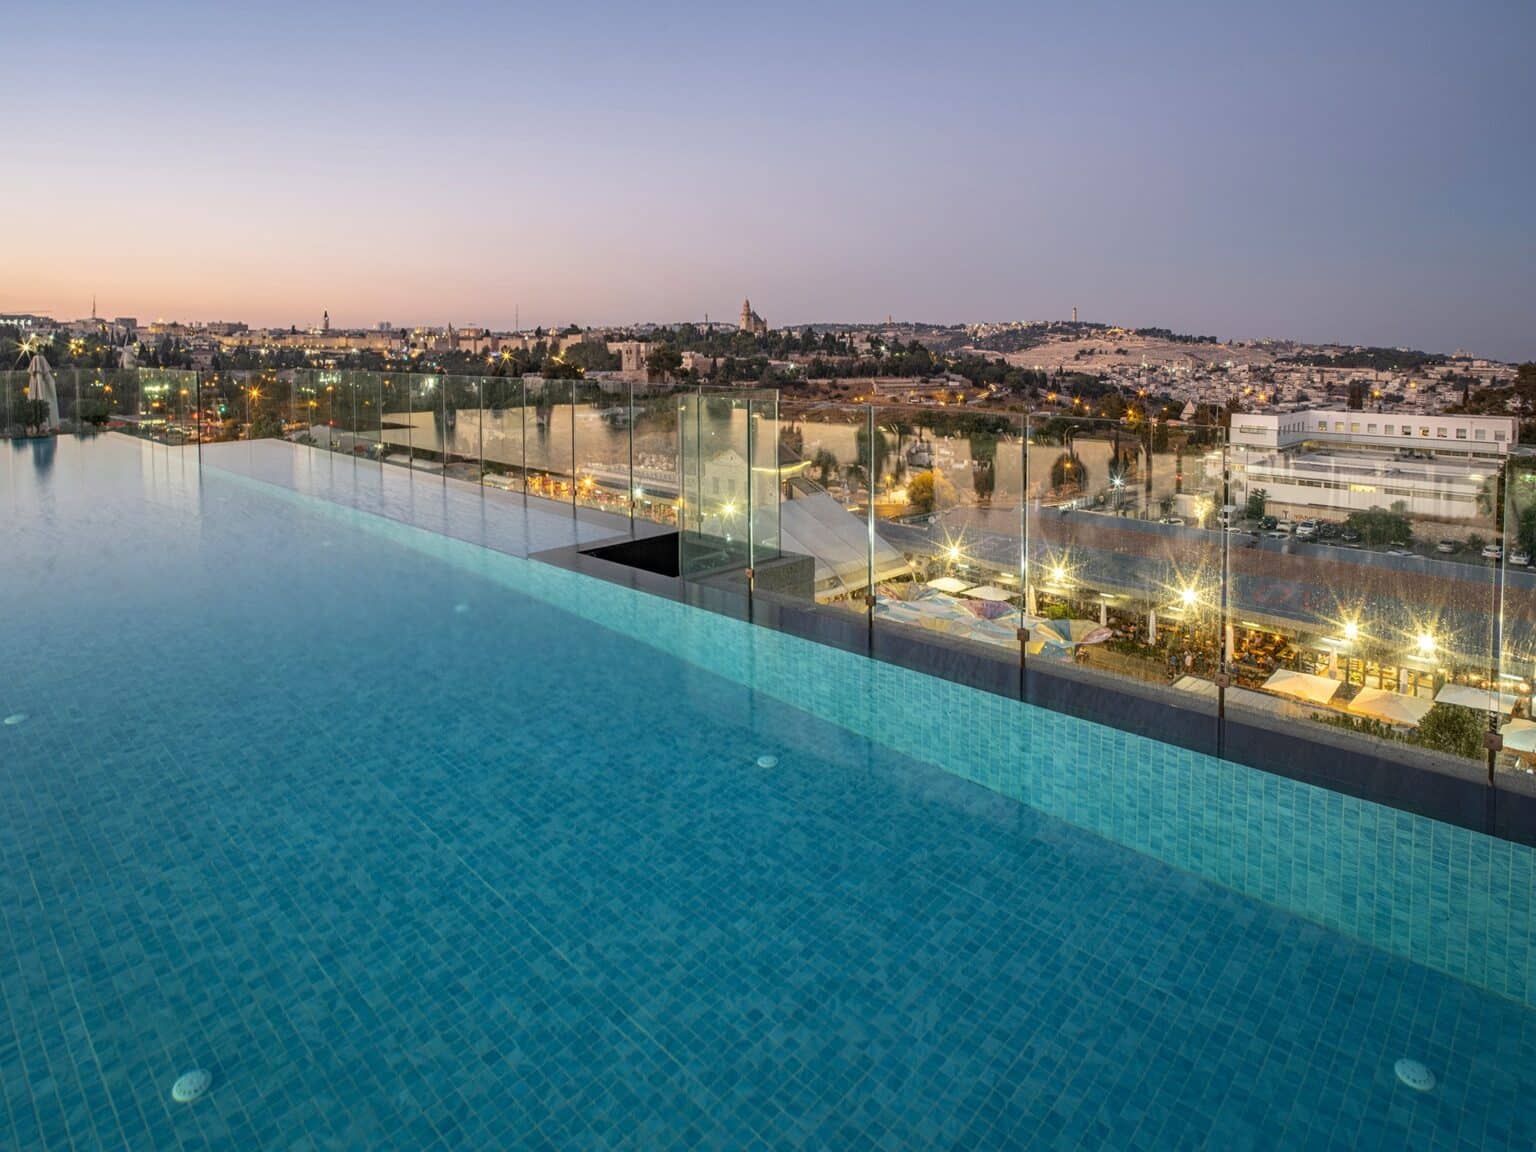 Luxury hotels in Israel